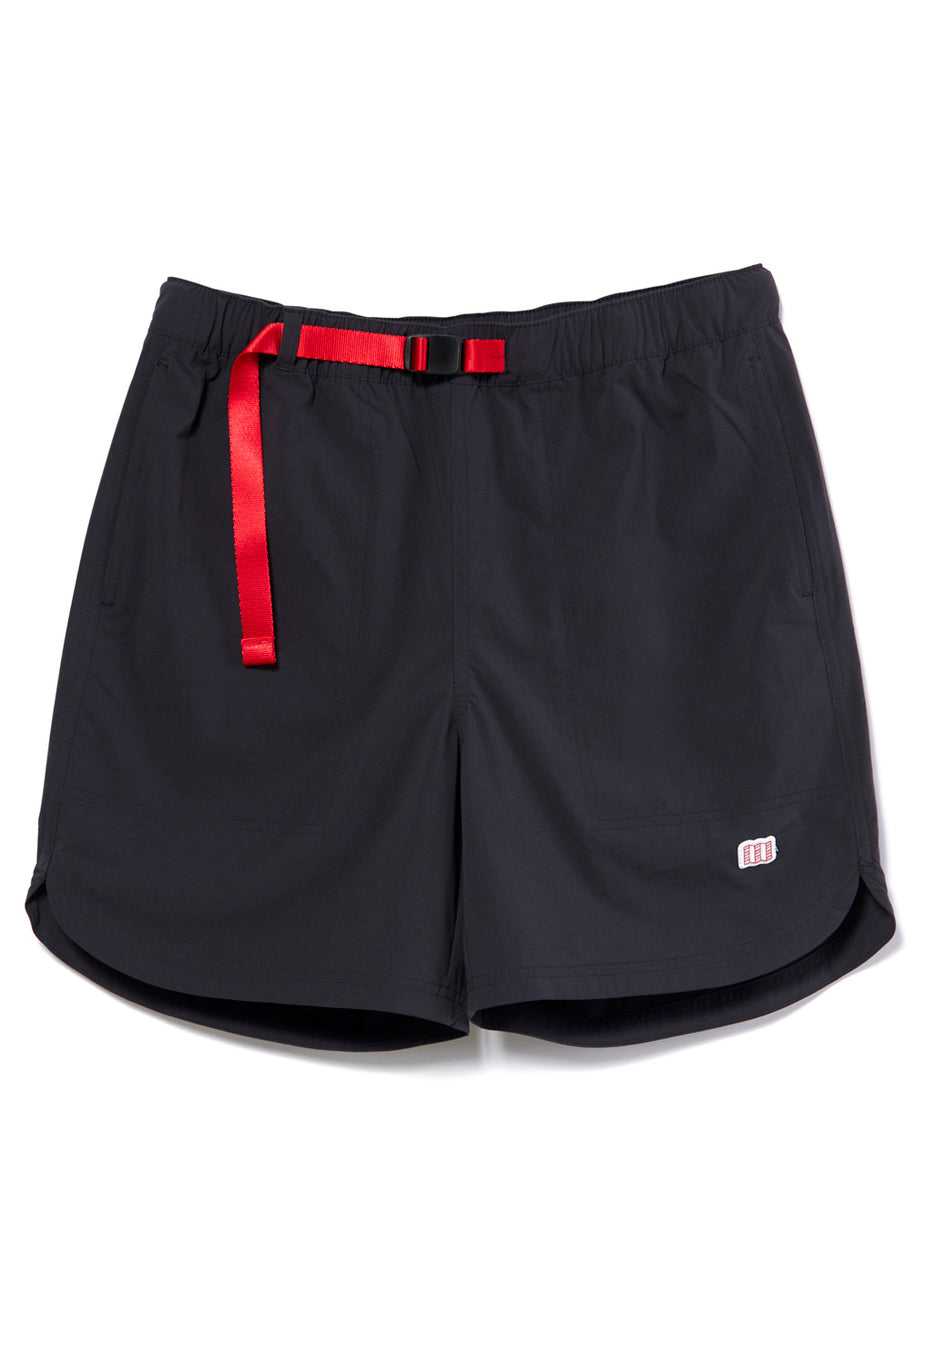 Topo Designs Men's River Shorts 7